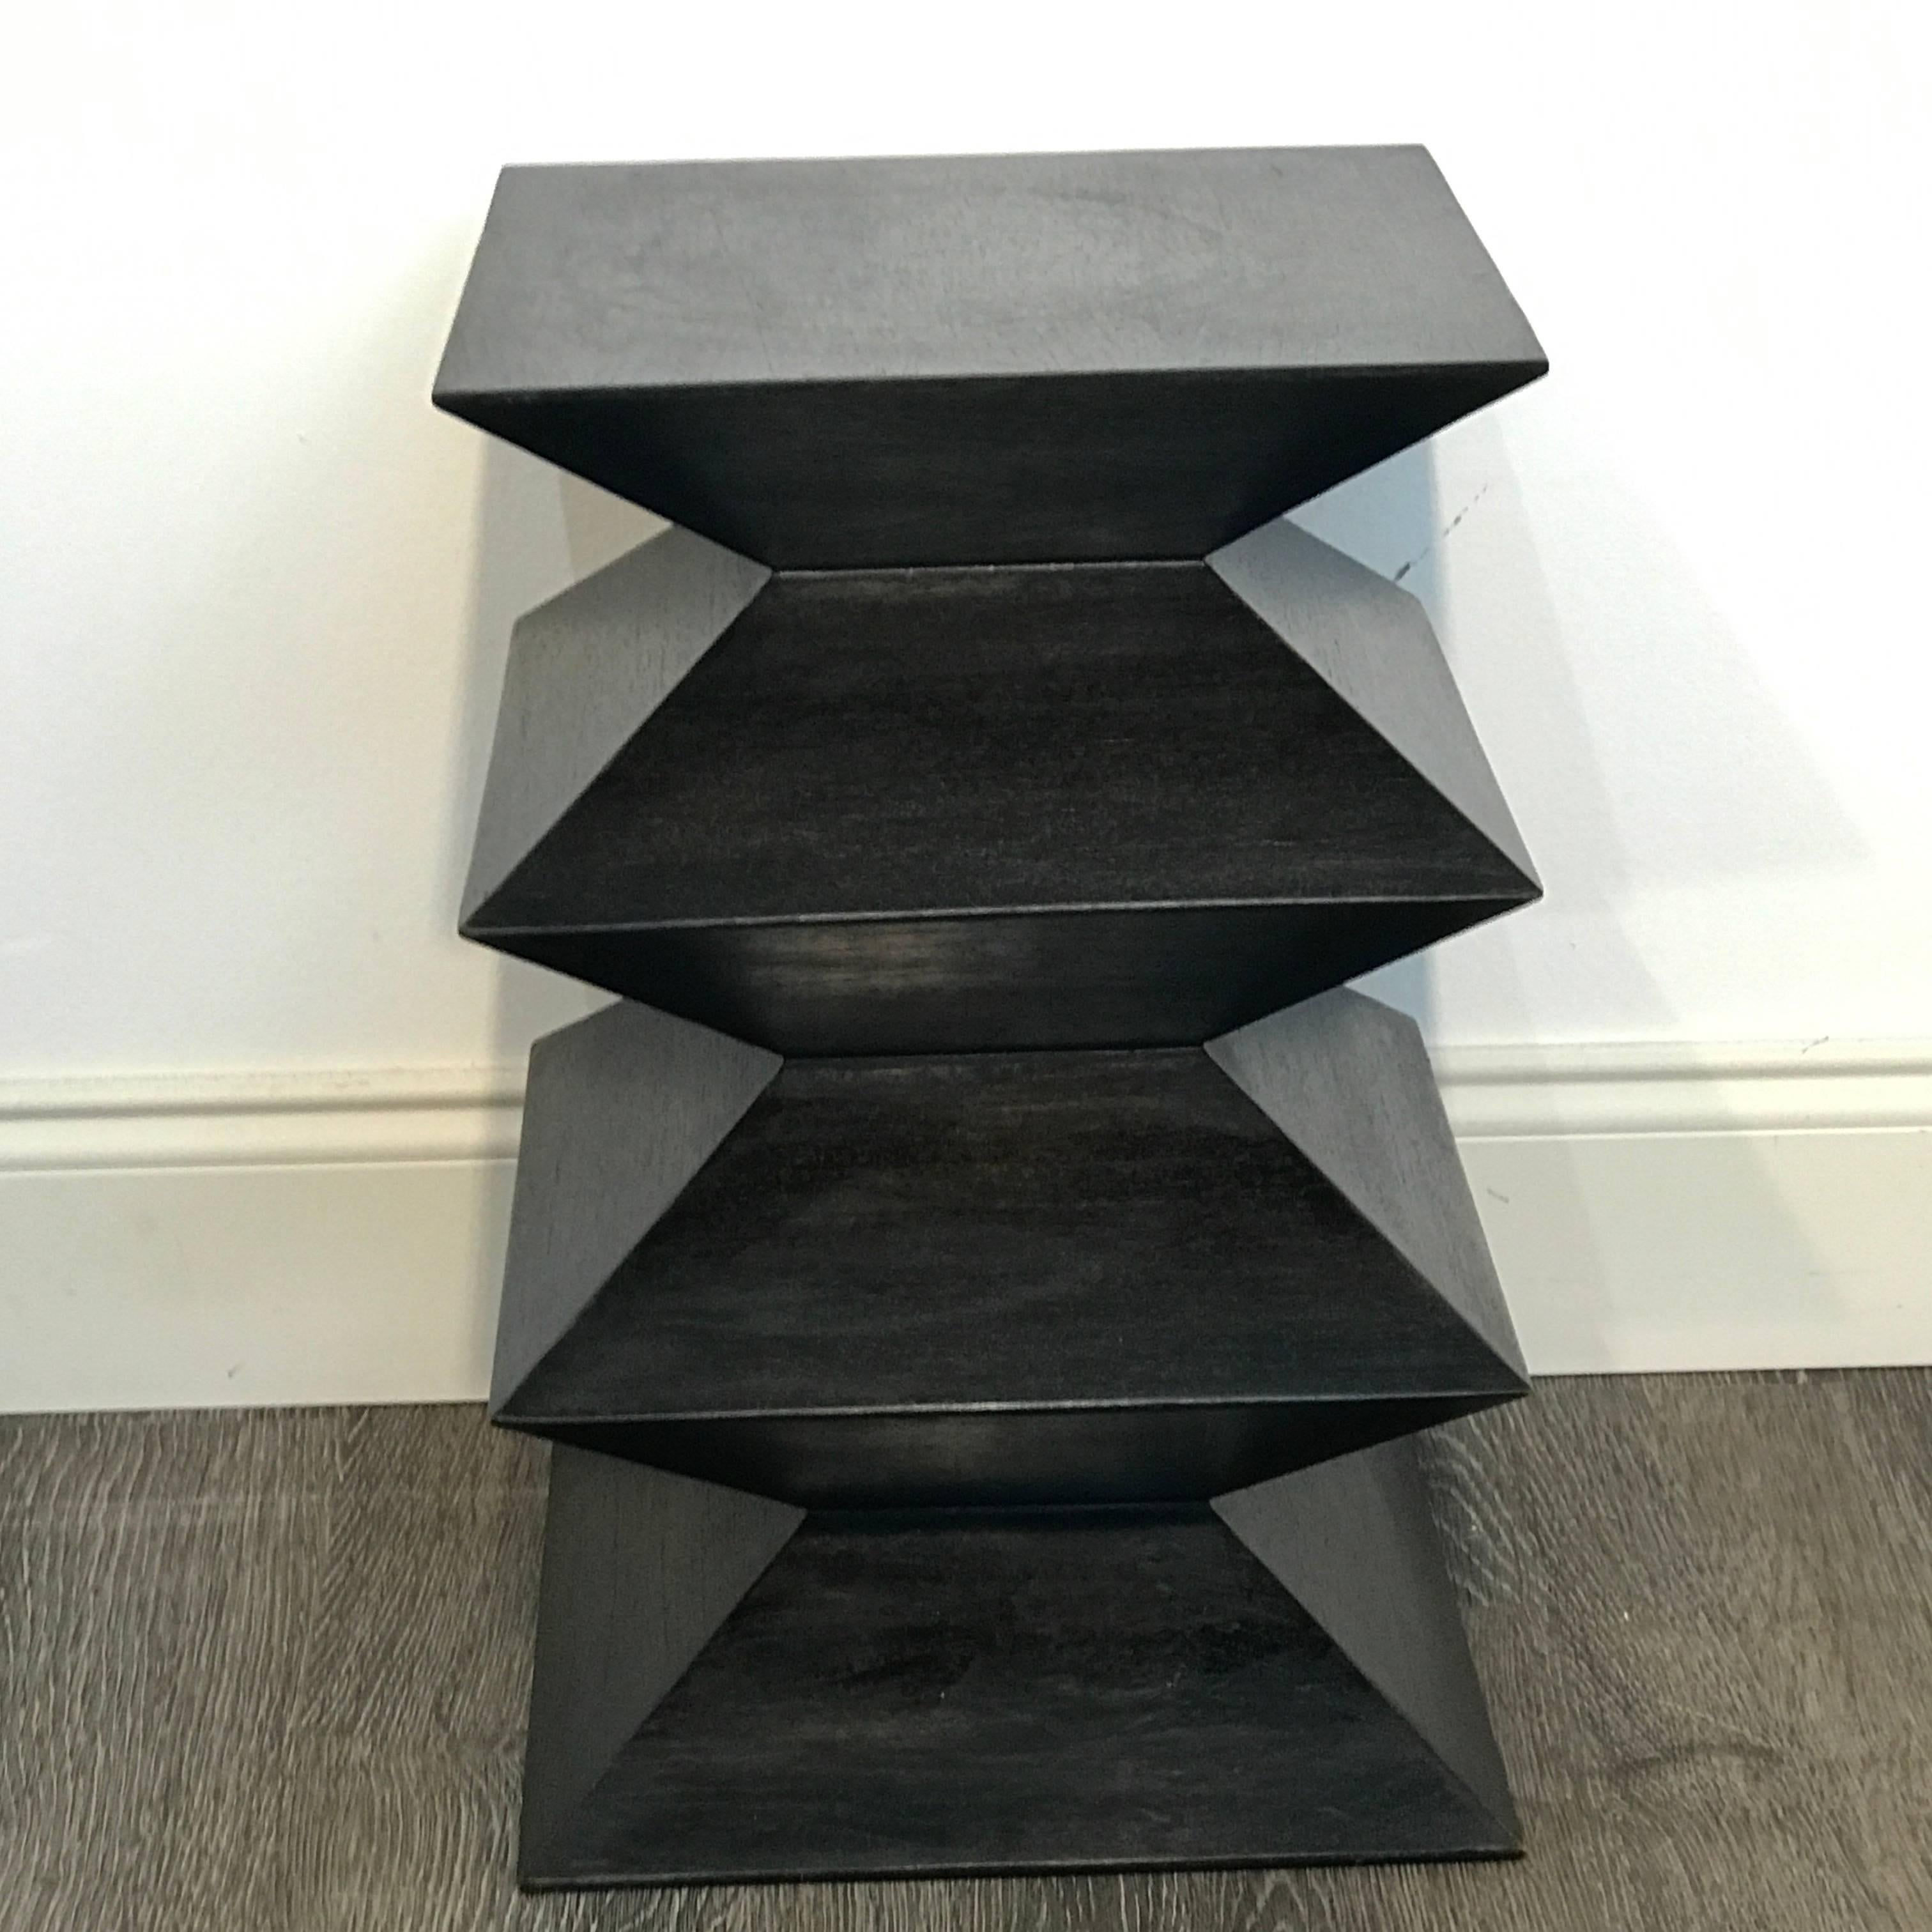 Postmodern blackened zig zag side table or pedestal, four-tiered blackened wood.